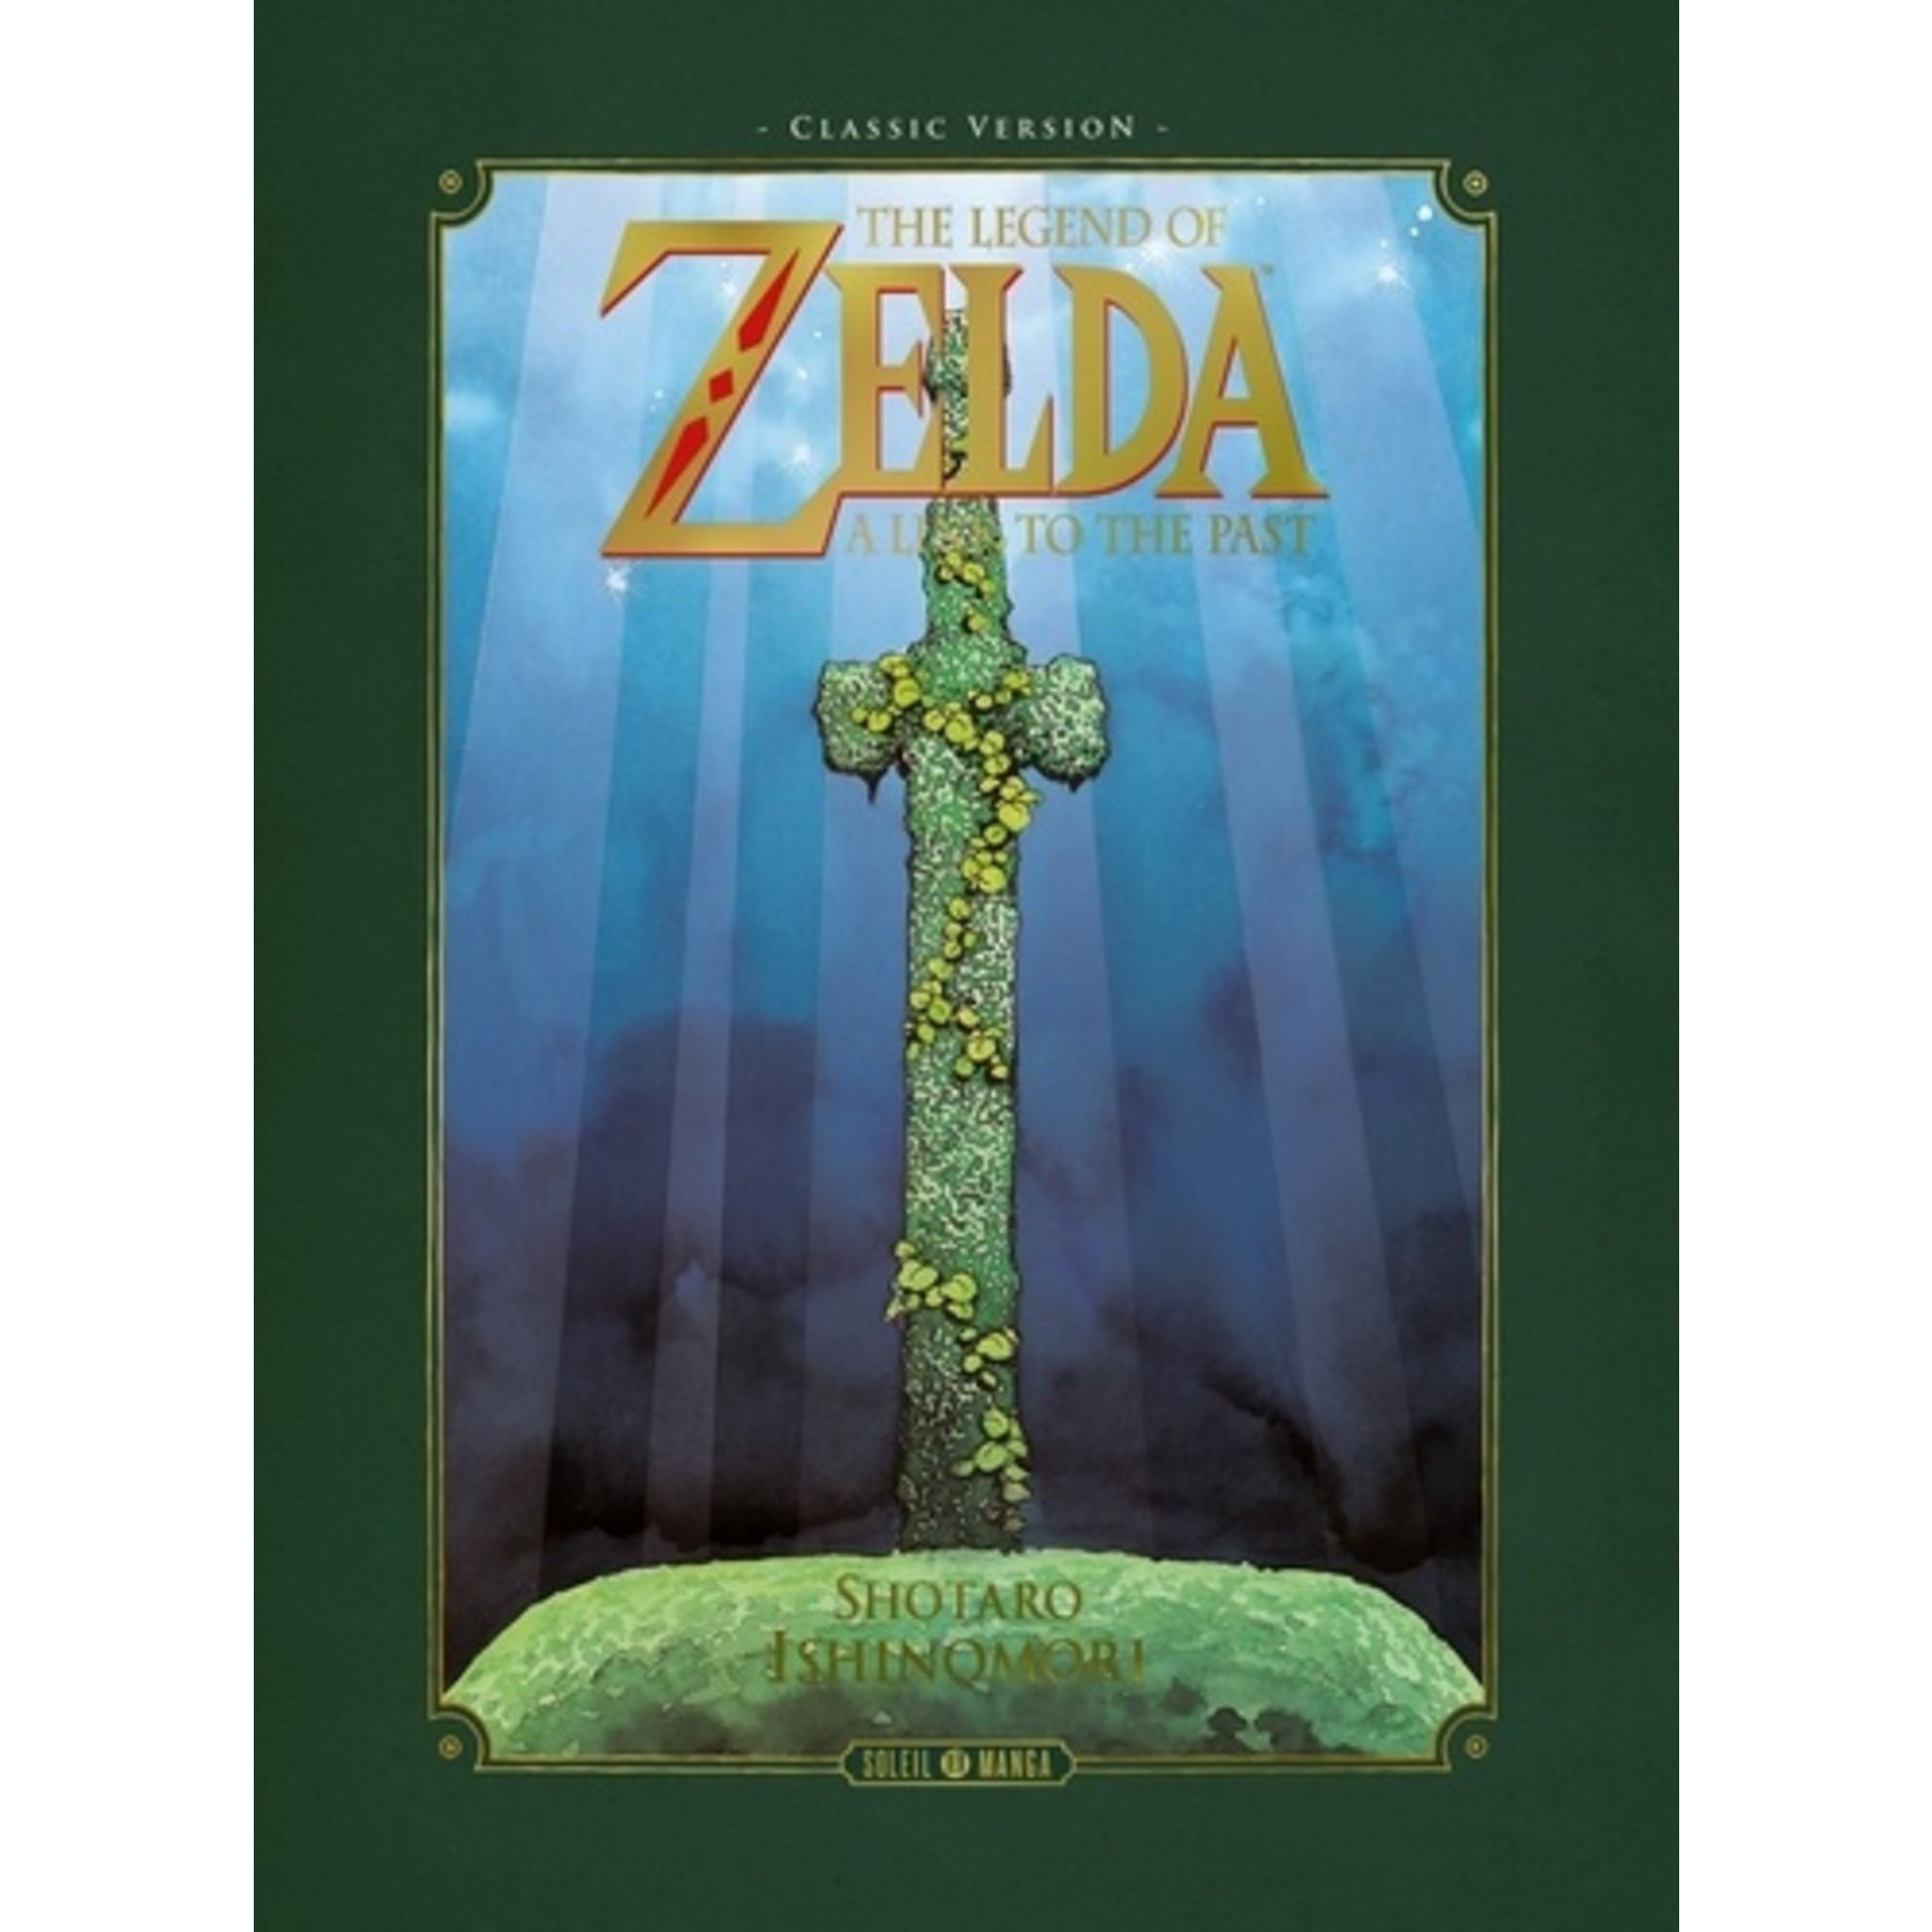 The Legend of Zelda . Edition légendaire - de Akira Himekawa